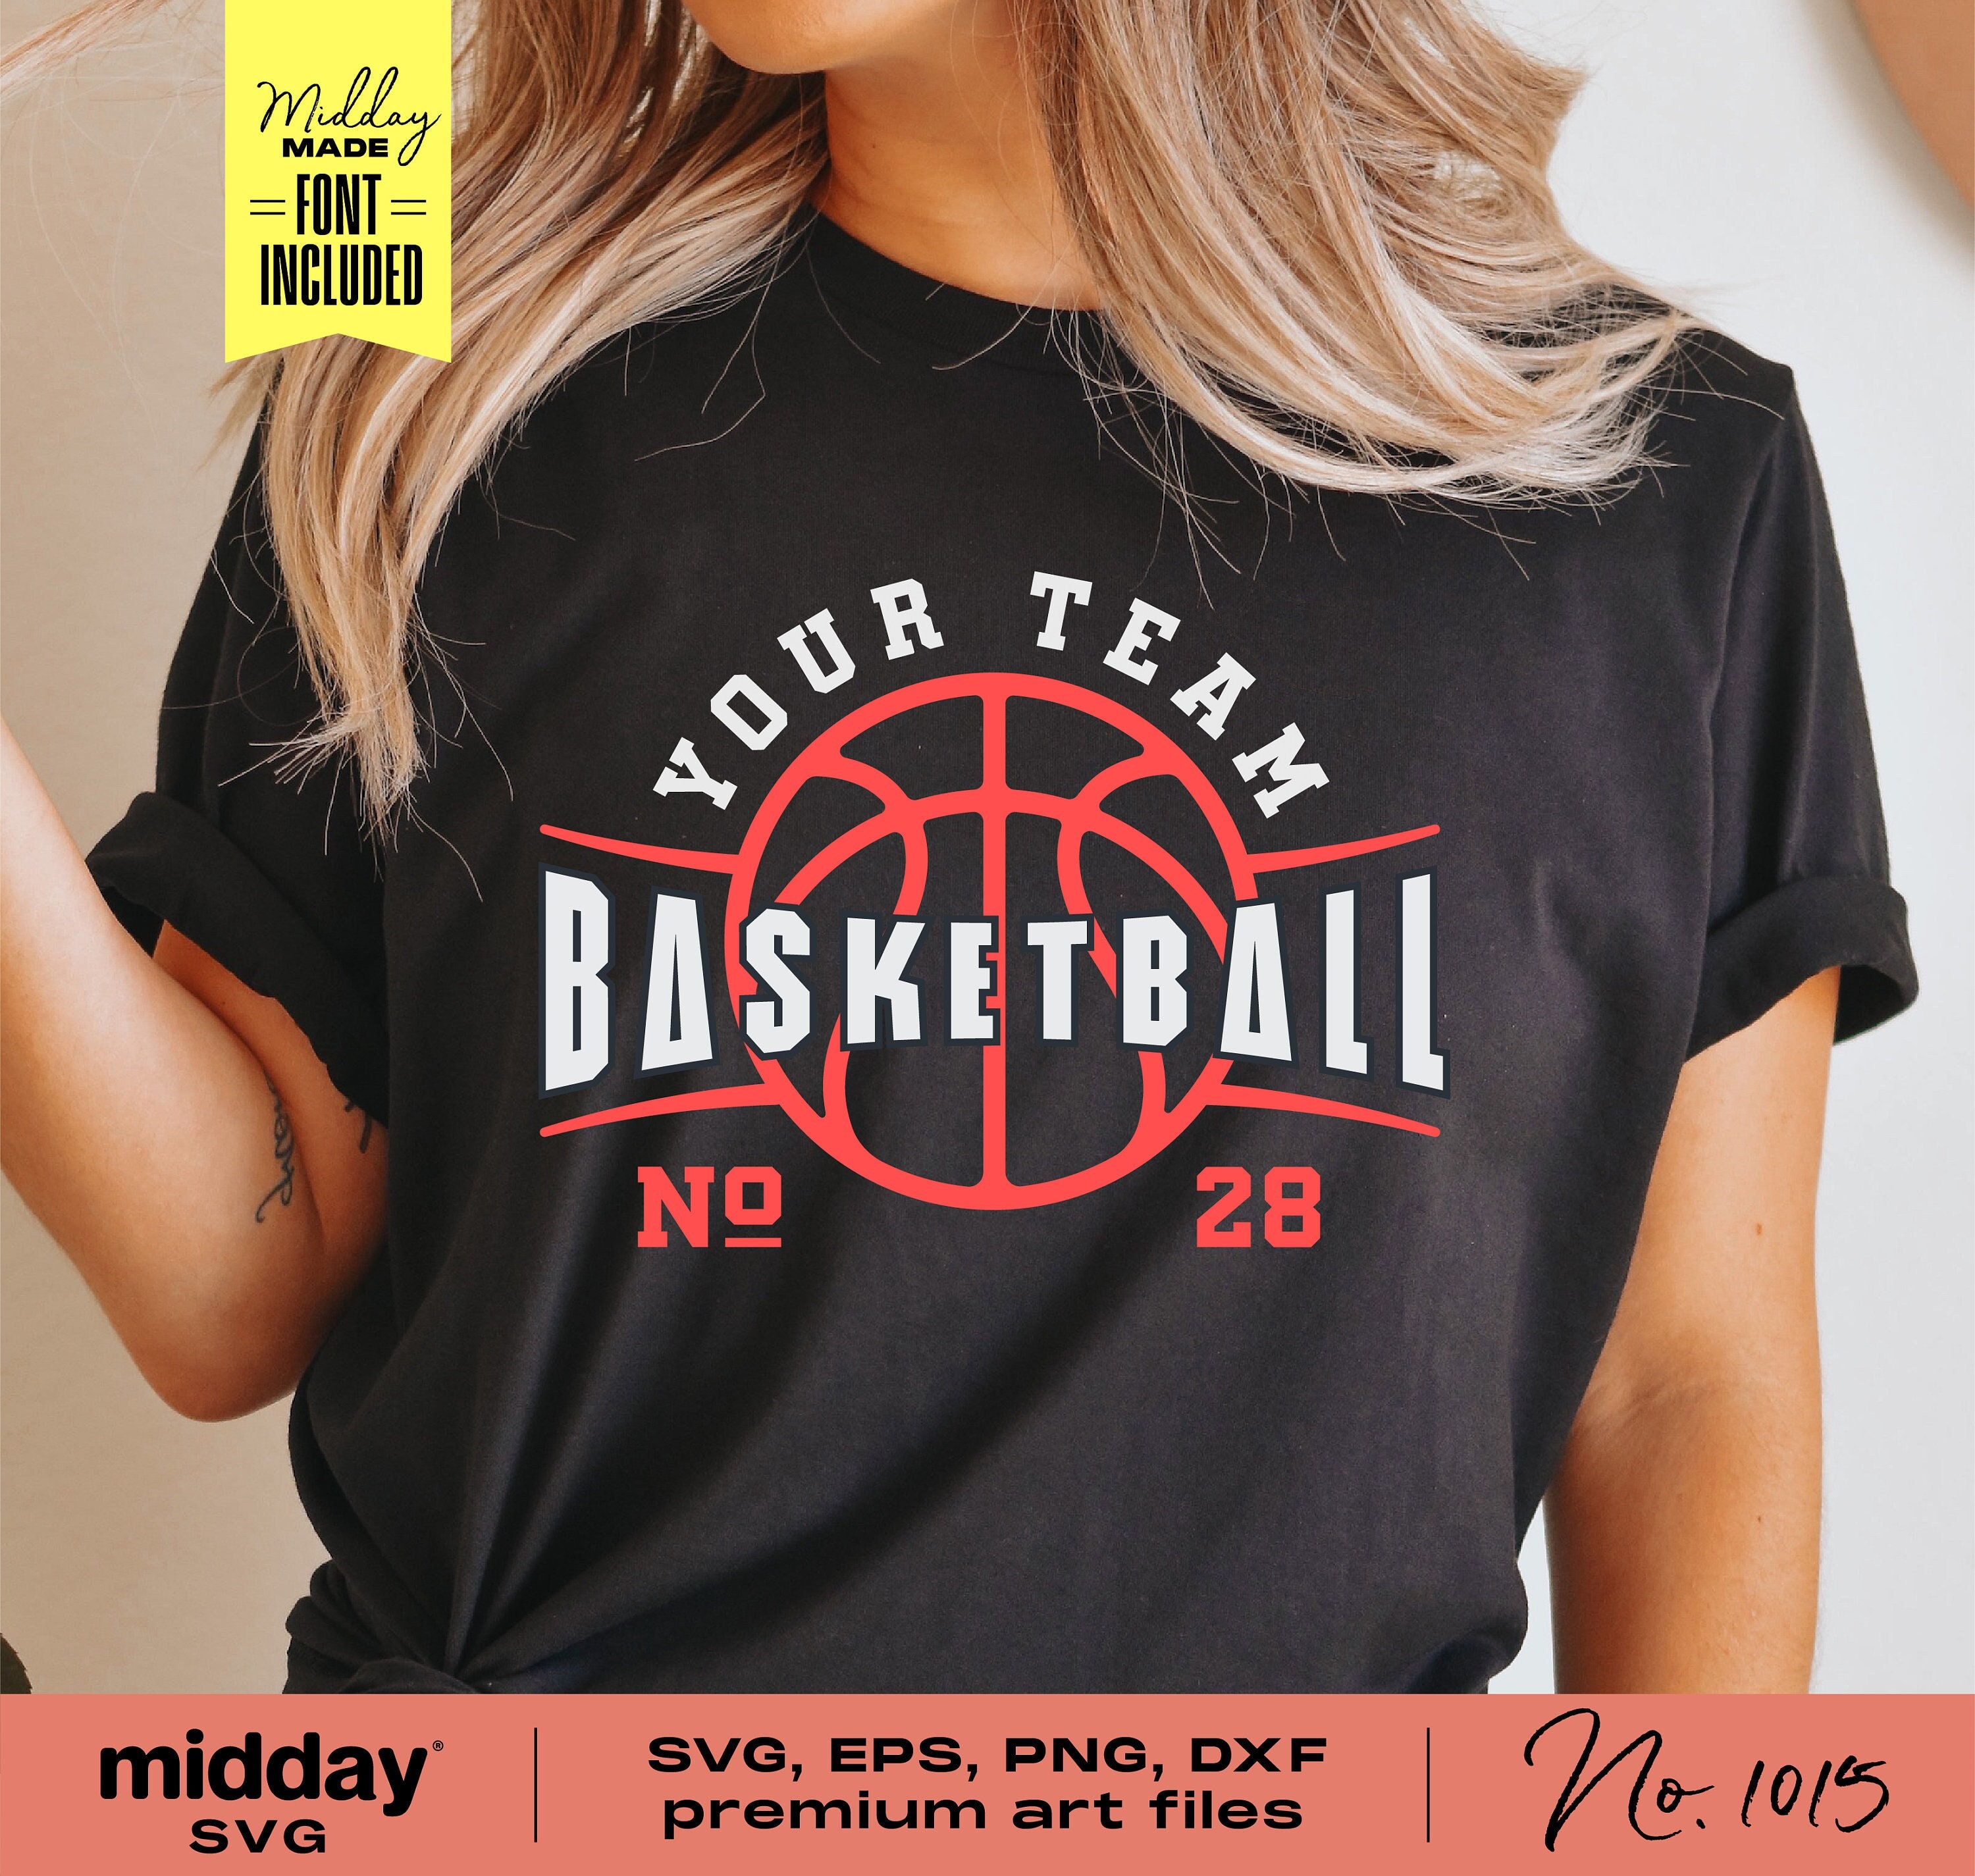 Basketball T-Shirt Design Ideas and Templates